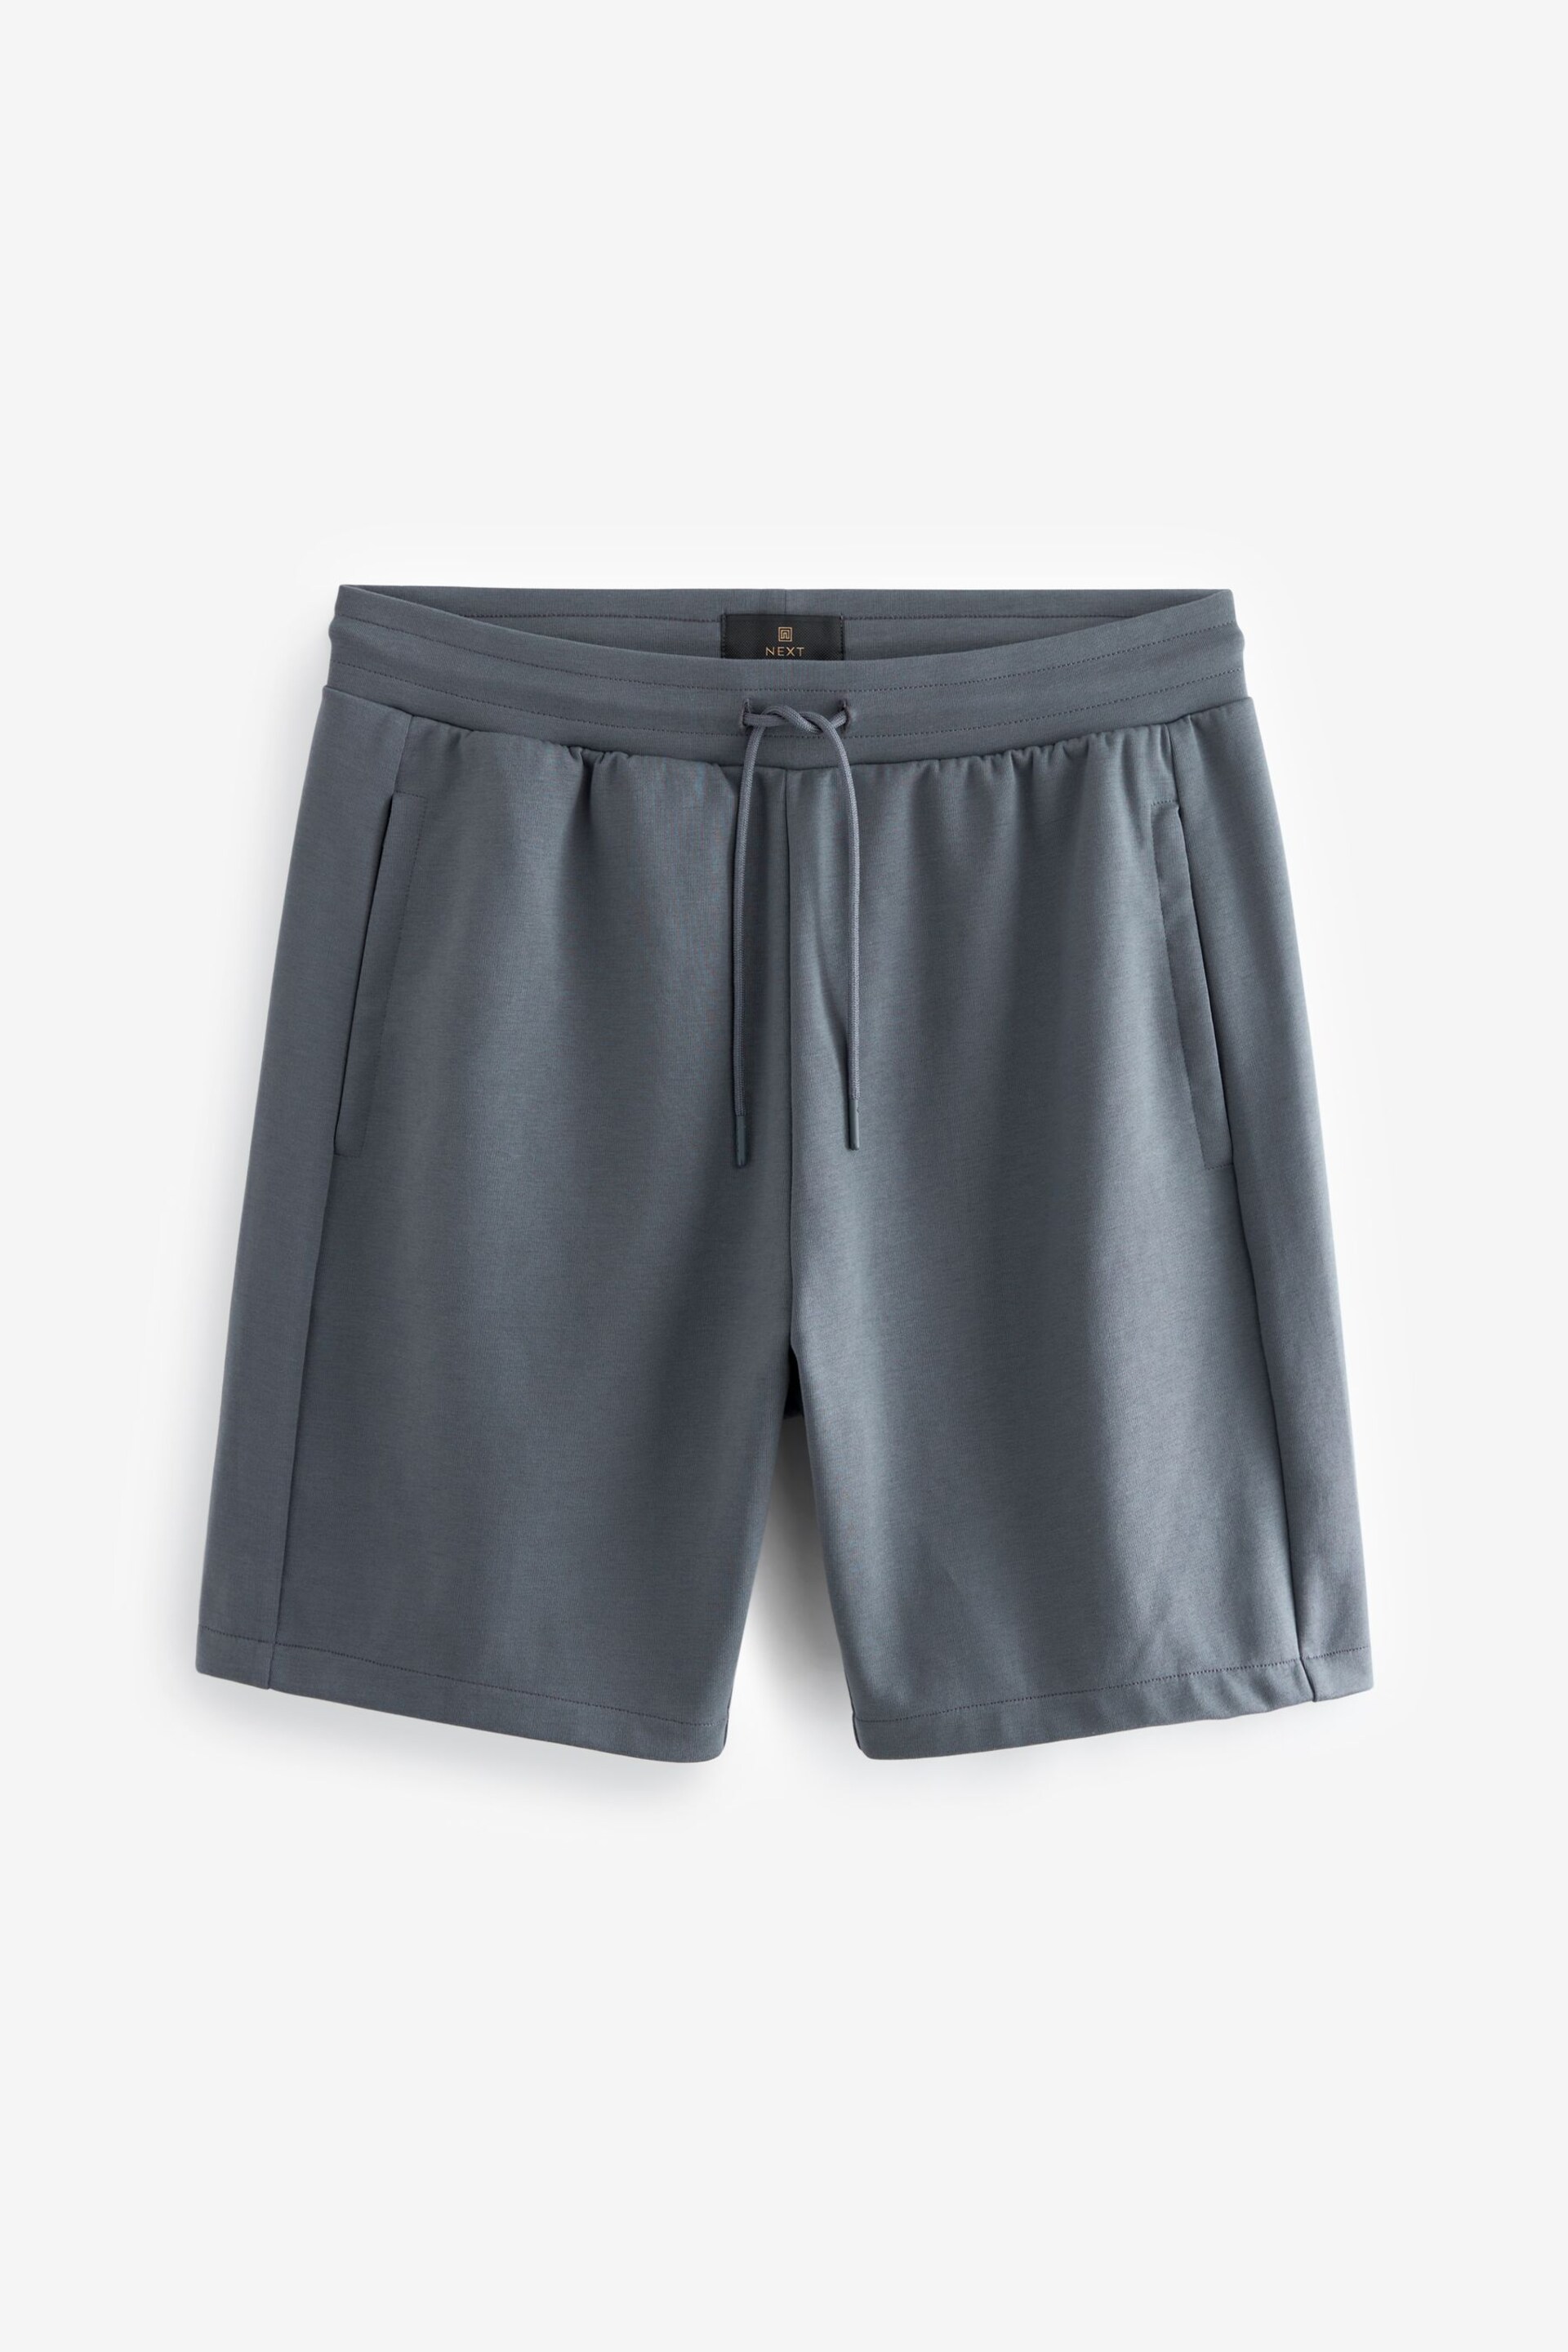 Slate Grey Zip Pocket Jersey Shorts - Image 4 of 8